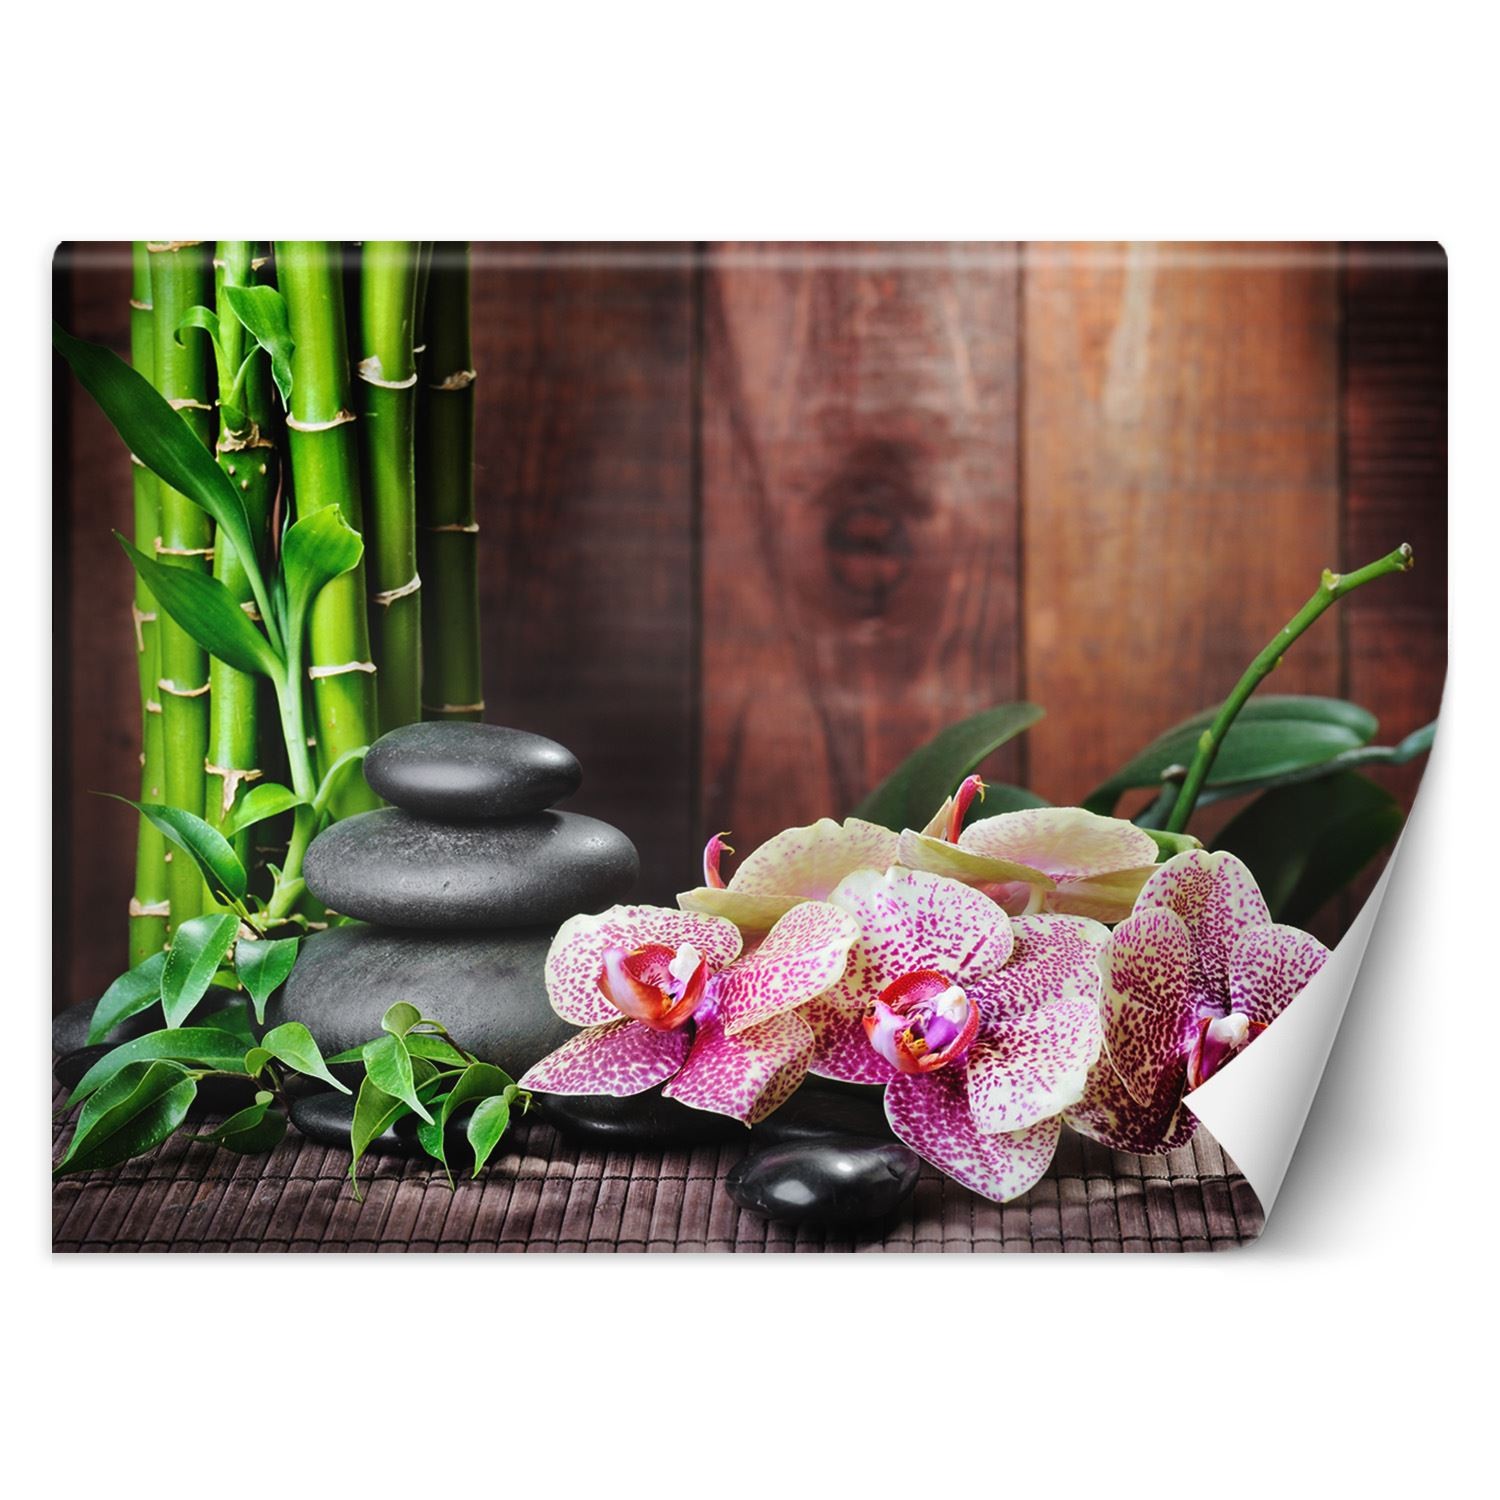 Trend24 – Behang – Orchidee Met Bamboe – Vliesbehang – Fotobehang – Behang Woonkamer – 450x315x2 cm – Incl. behanglijm